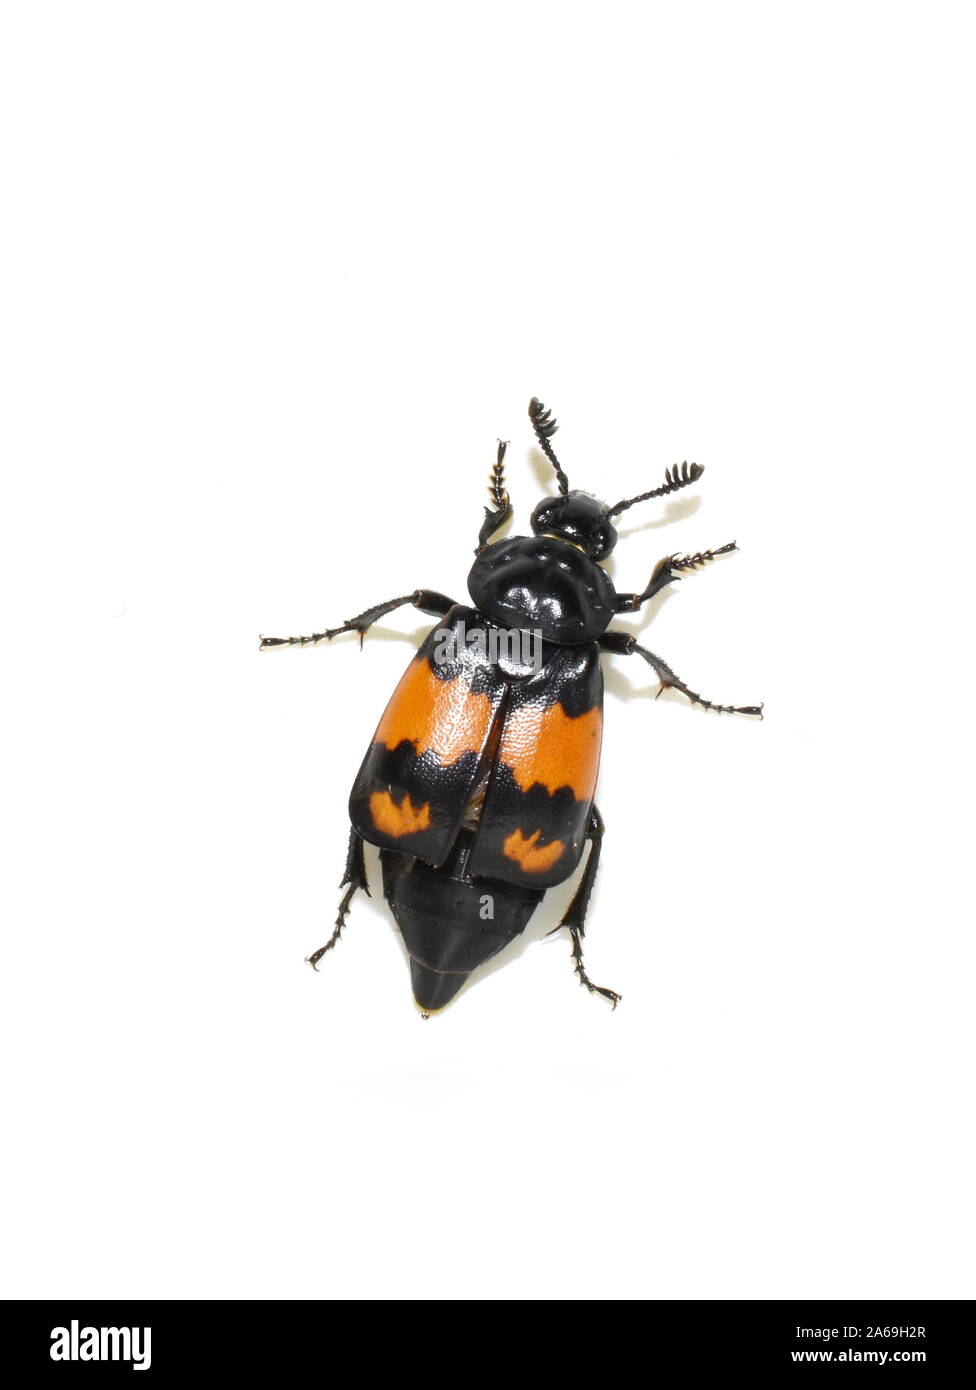 The black and orange carrion beetle Nicrophorus investigator on white background Stock Photo